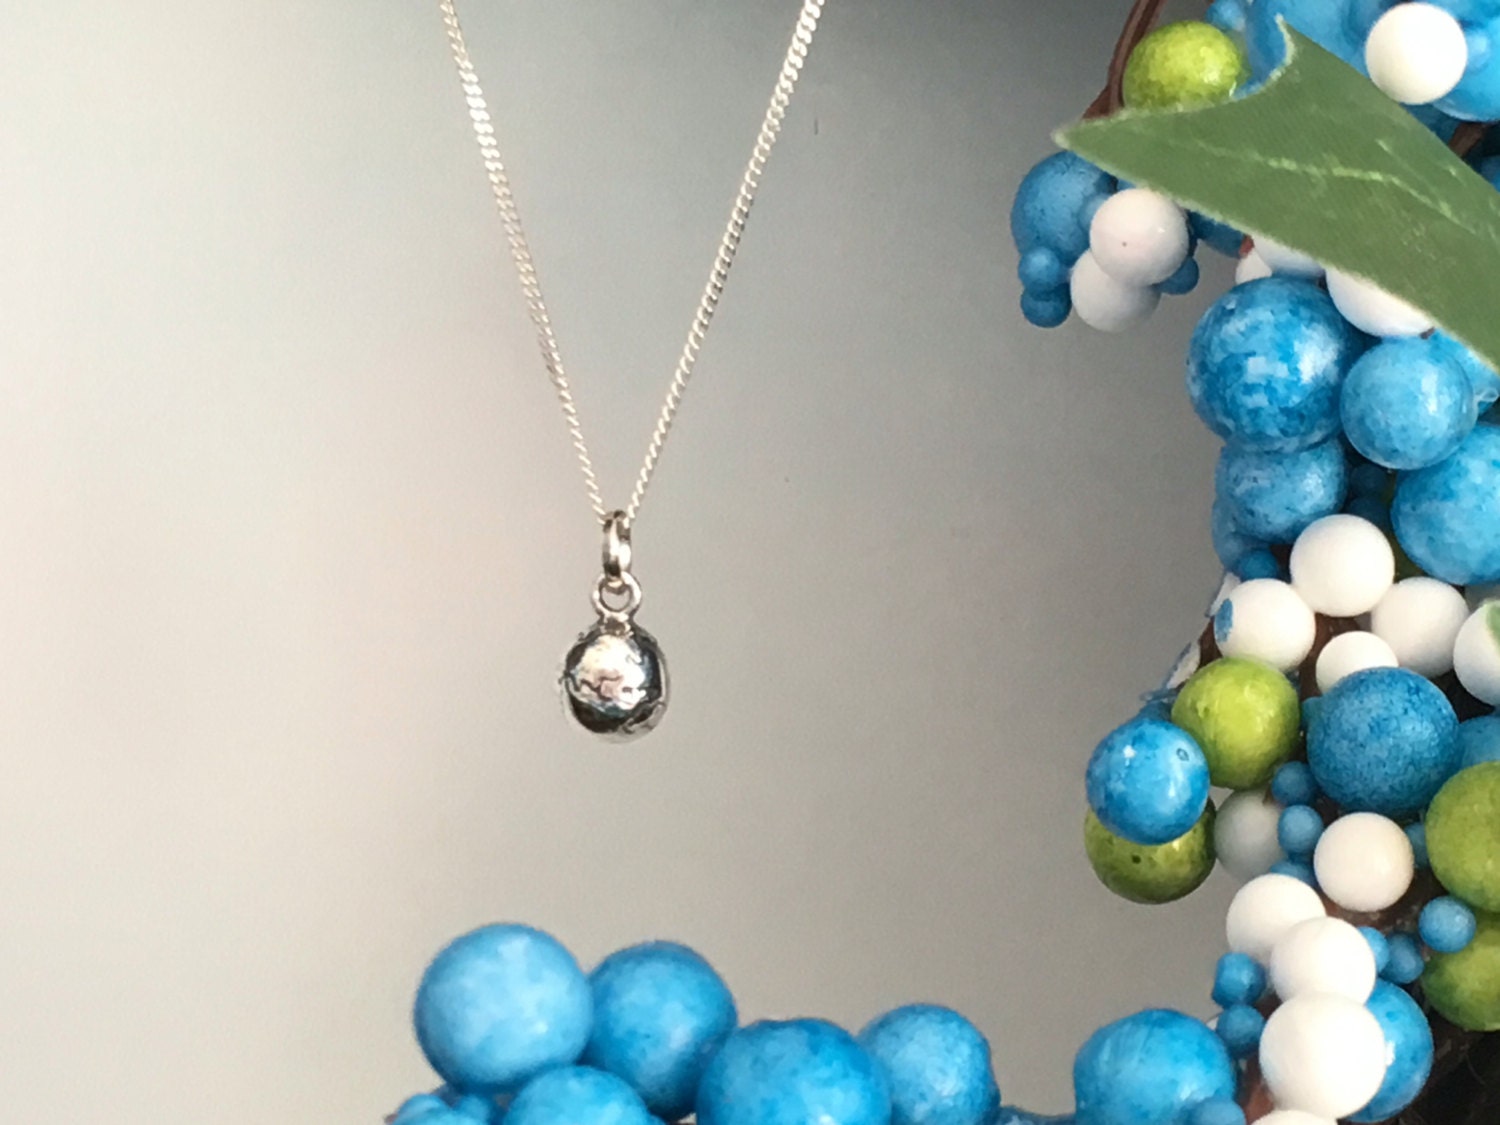 Sterling Silver World Globe Necklace